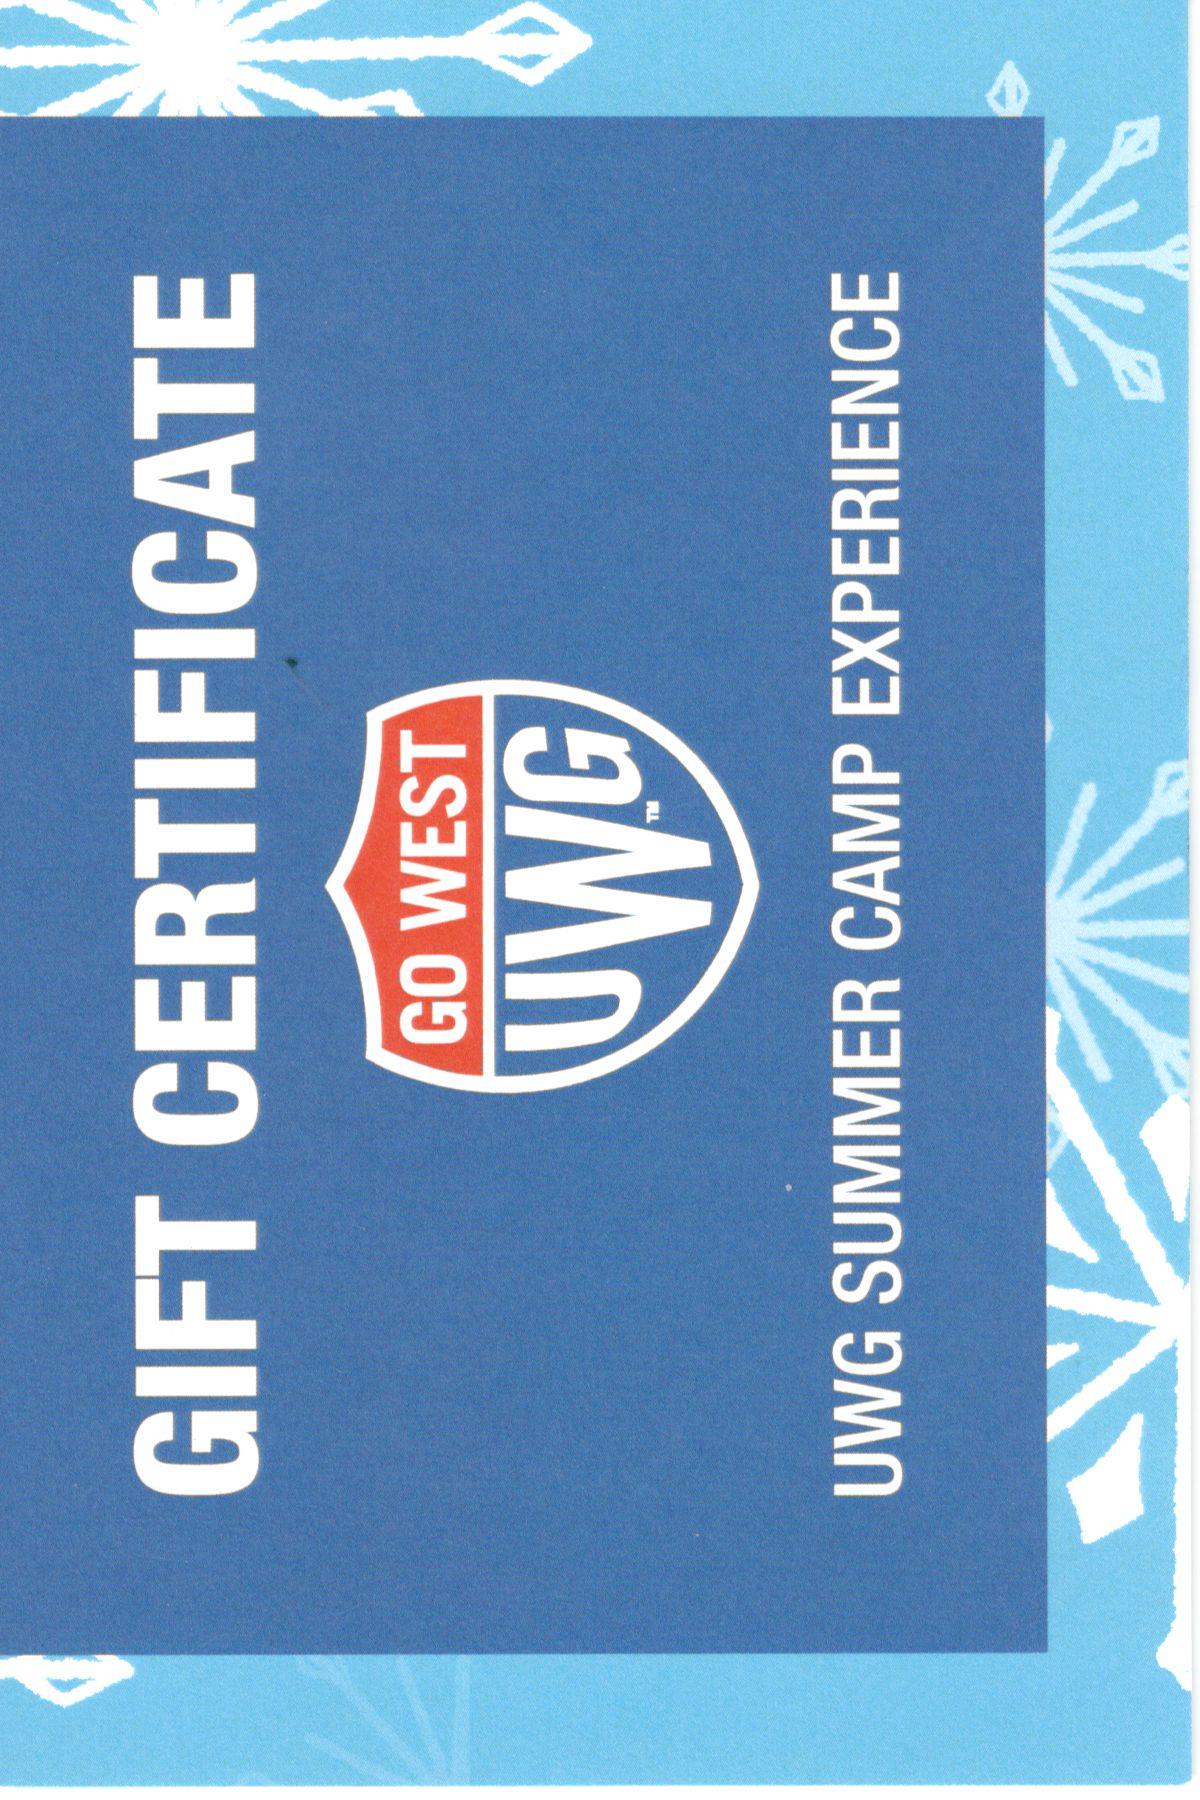 UWG Summer Camp Gift Certificates 24AGALLD24